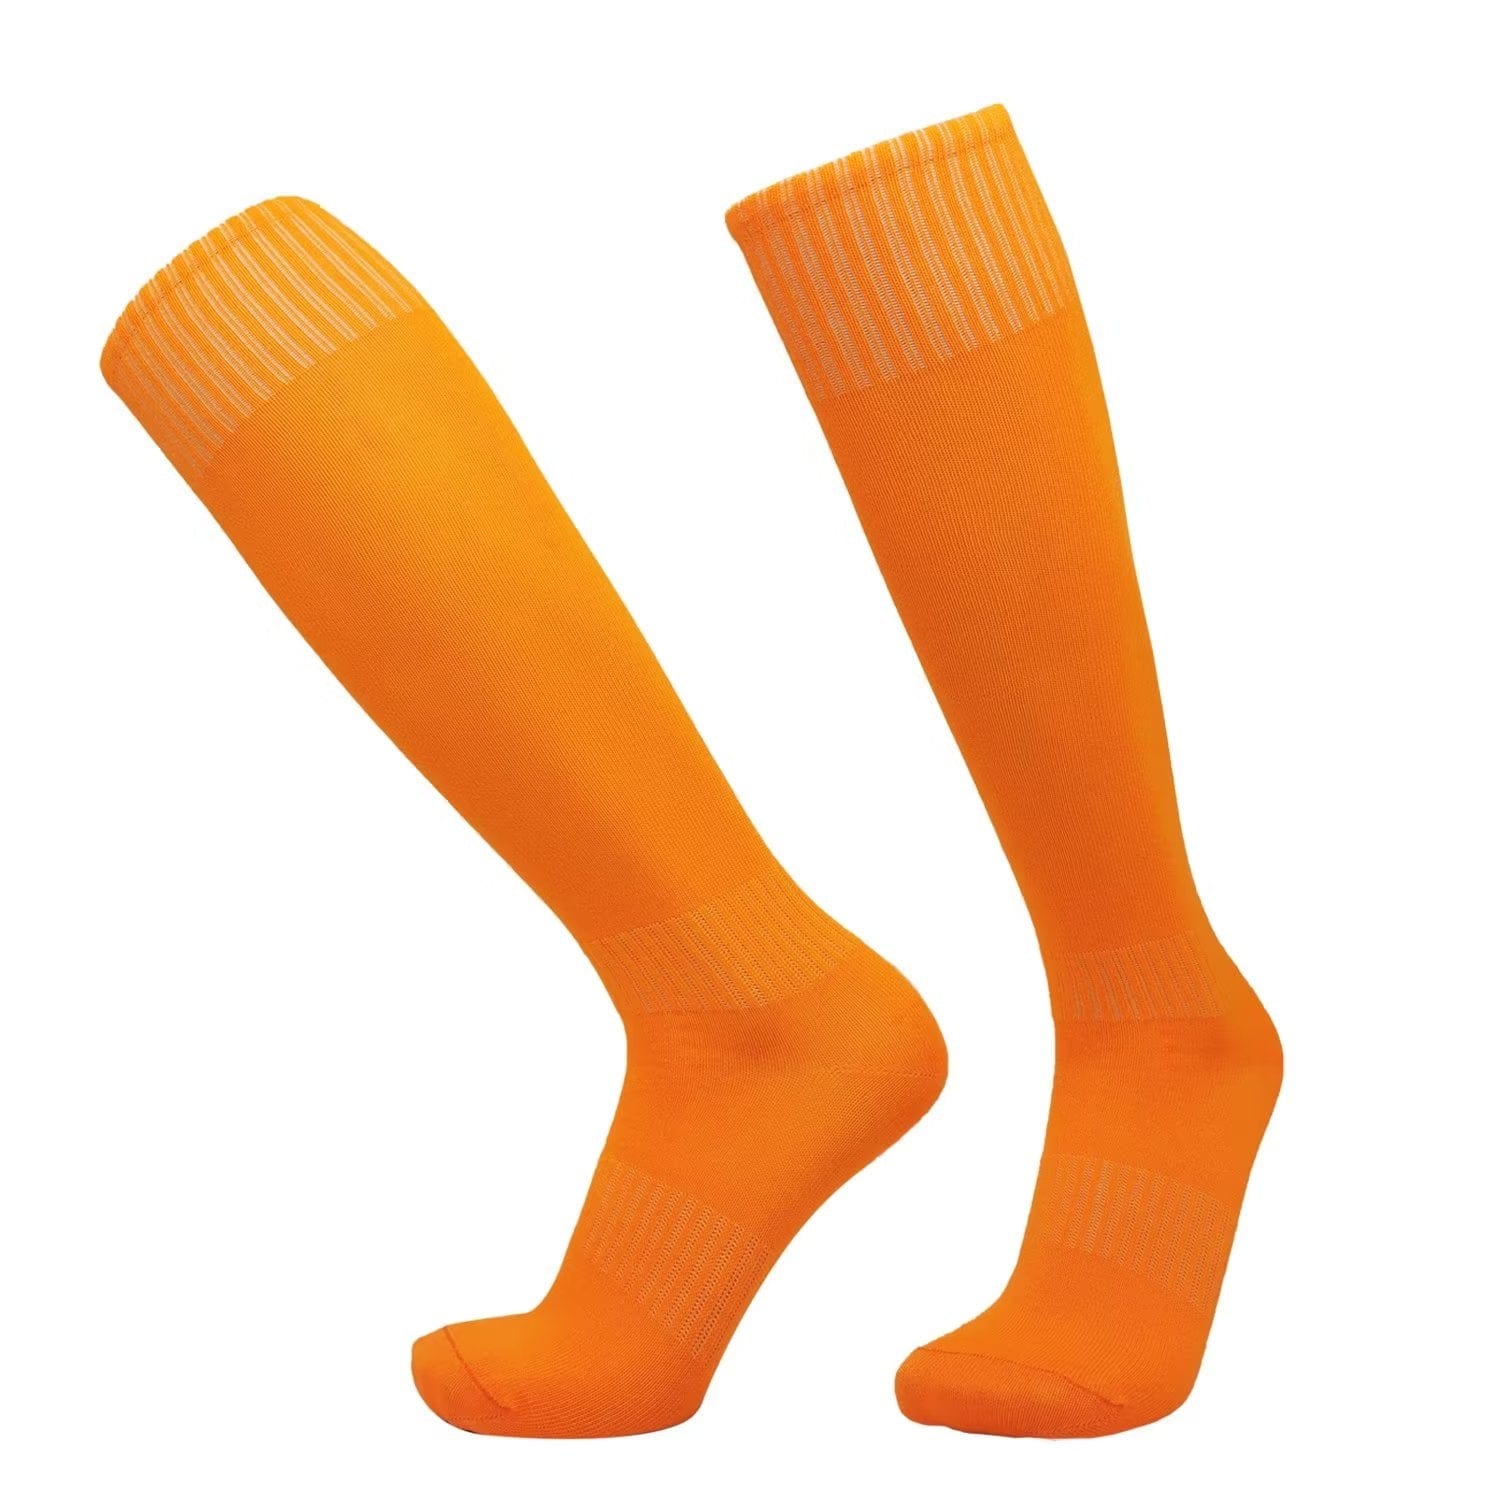 My Socks Orange / 39-44 Chaussettes Hautes Homme Sport